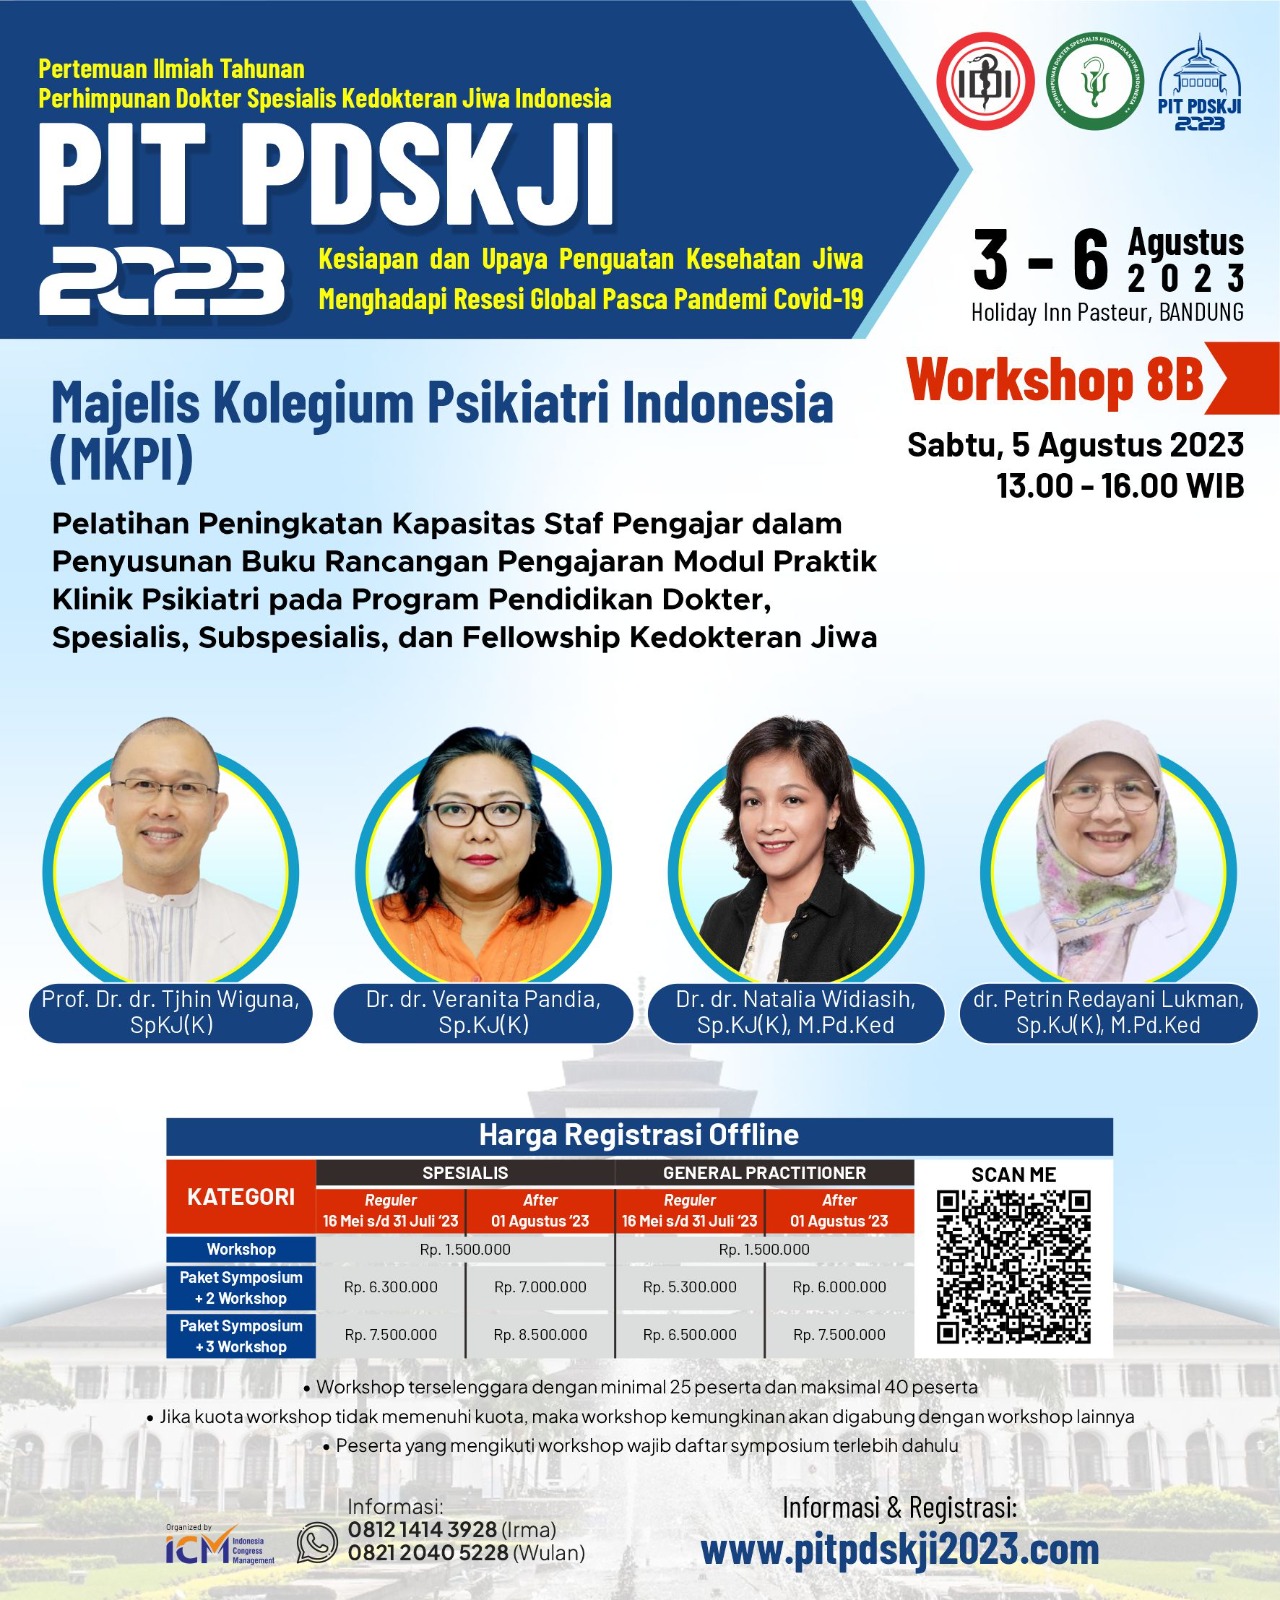 PIT PDSKJI Workshop 8B : Majelis Kolegium Psikiatri Indonesia